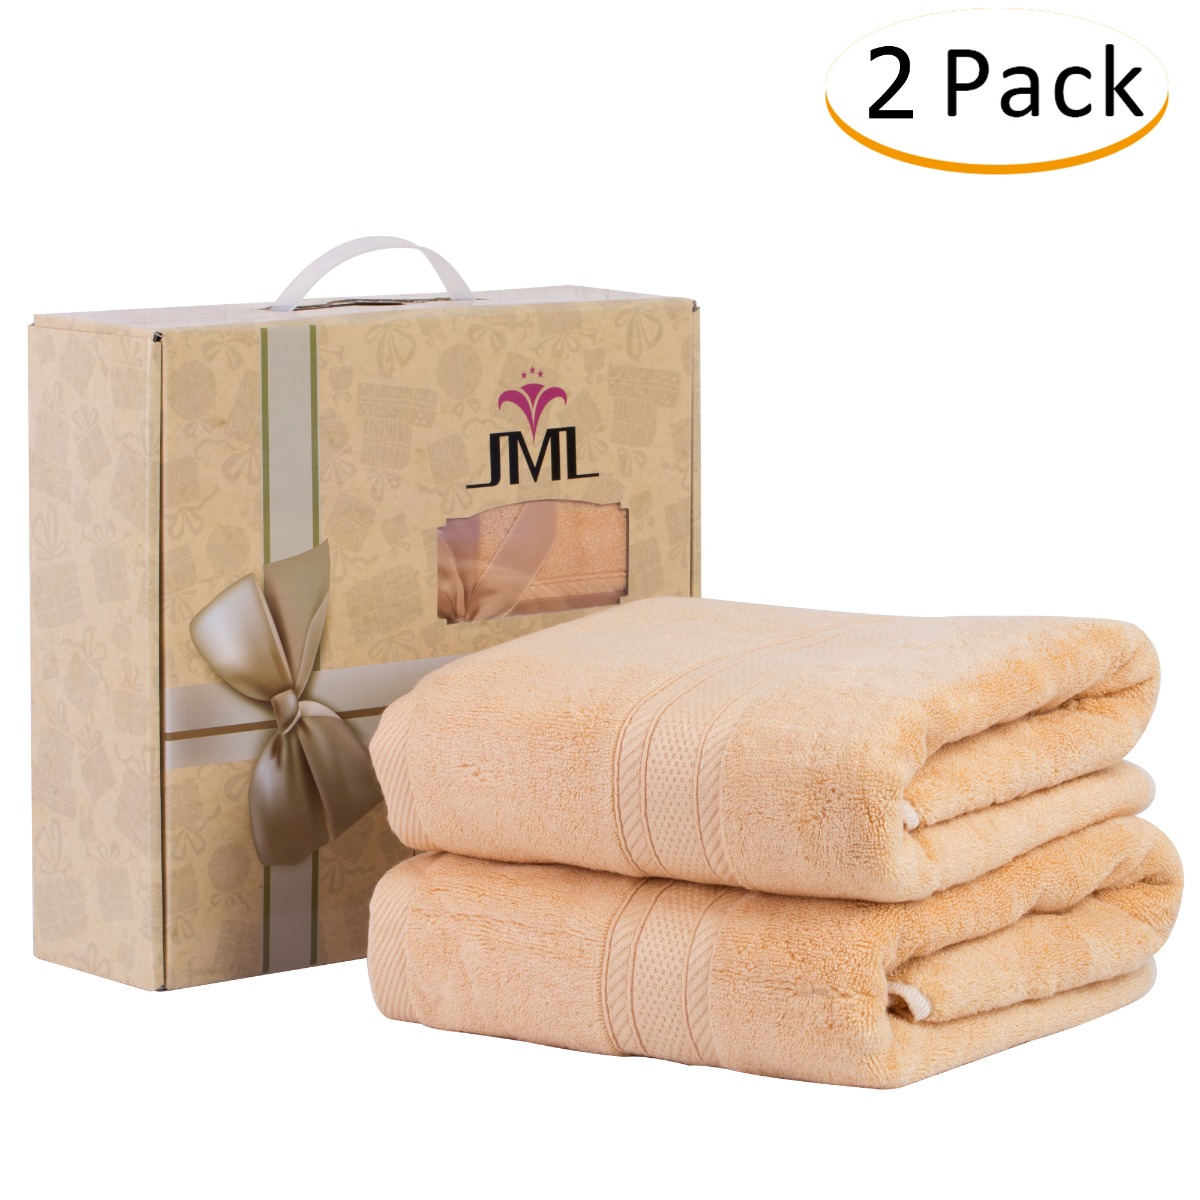 Jml Bamboo Bath Towels 2 Piece Luxury Bath Towel Set for Bathroom(27x55)  Hypoallergenic, Soft and Absorbent, Odor Resistant, Skin Friendly(Grey)